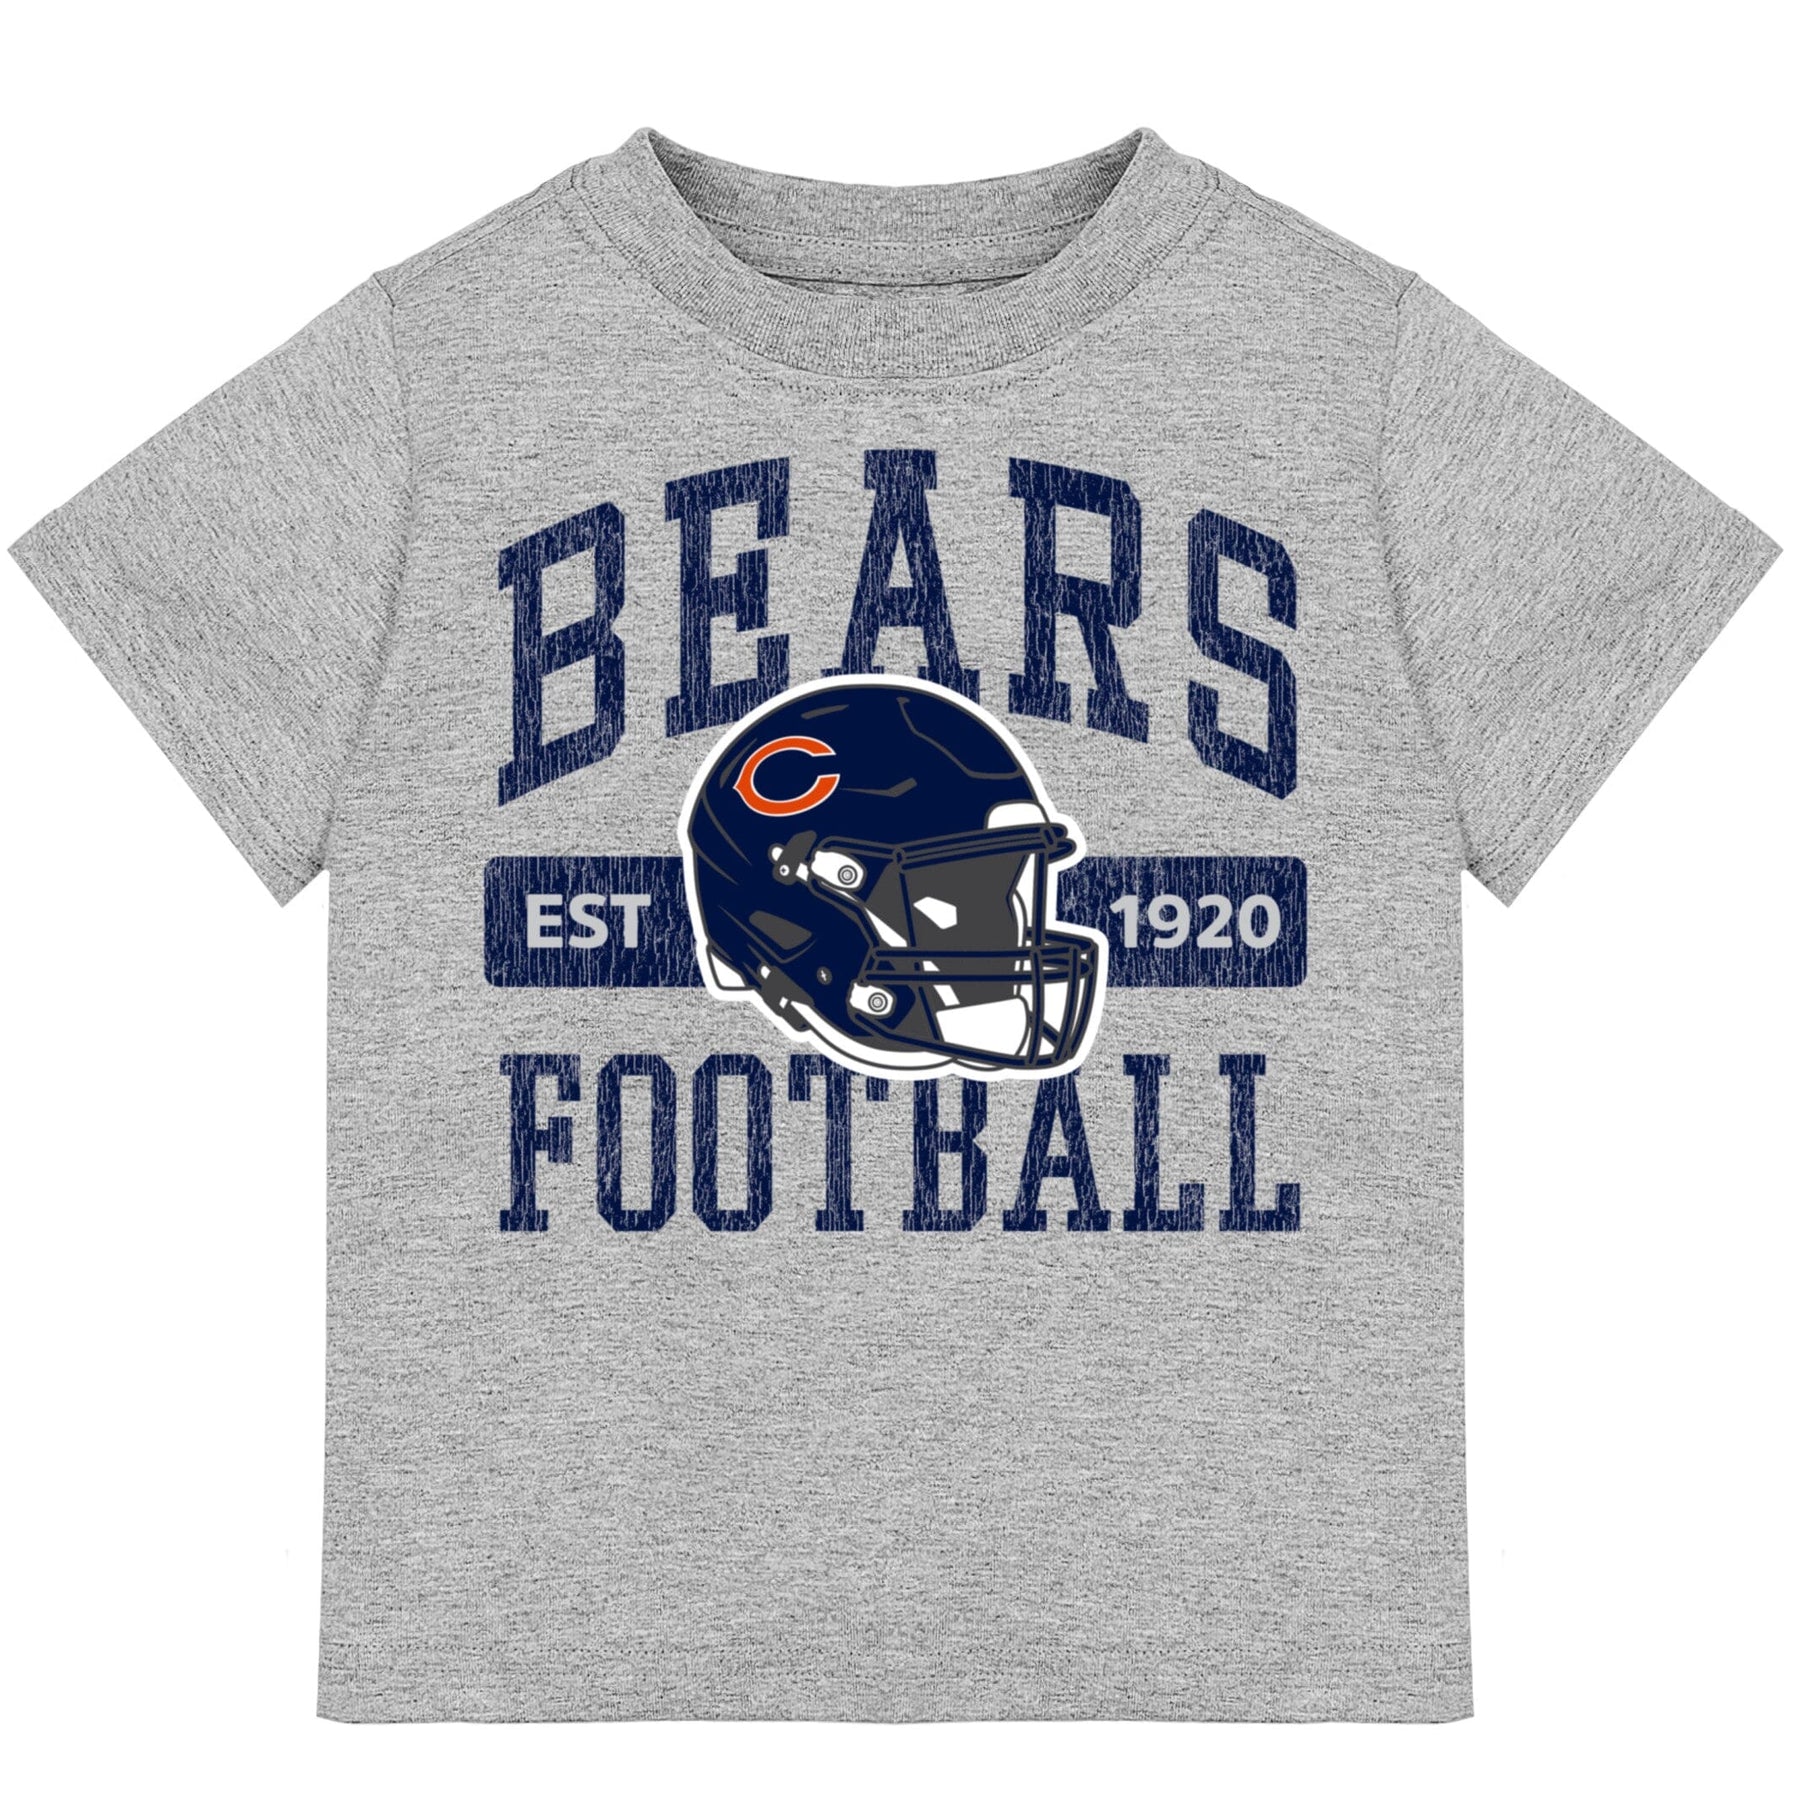 Football Fan Shop Officially Licensed NFL Short Sleeve Crew Neck - Bears - White